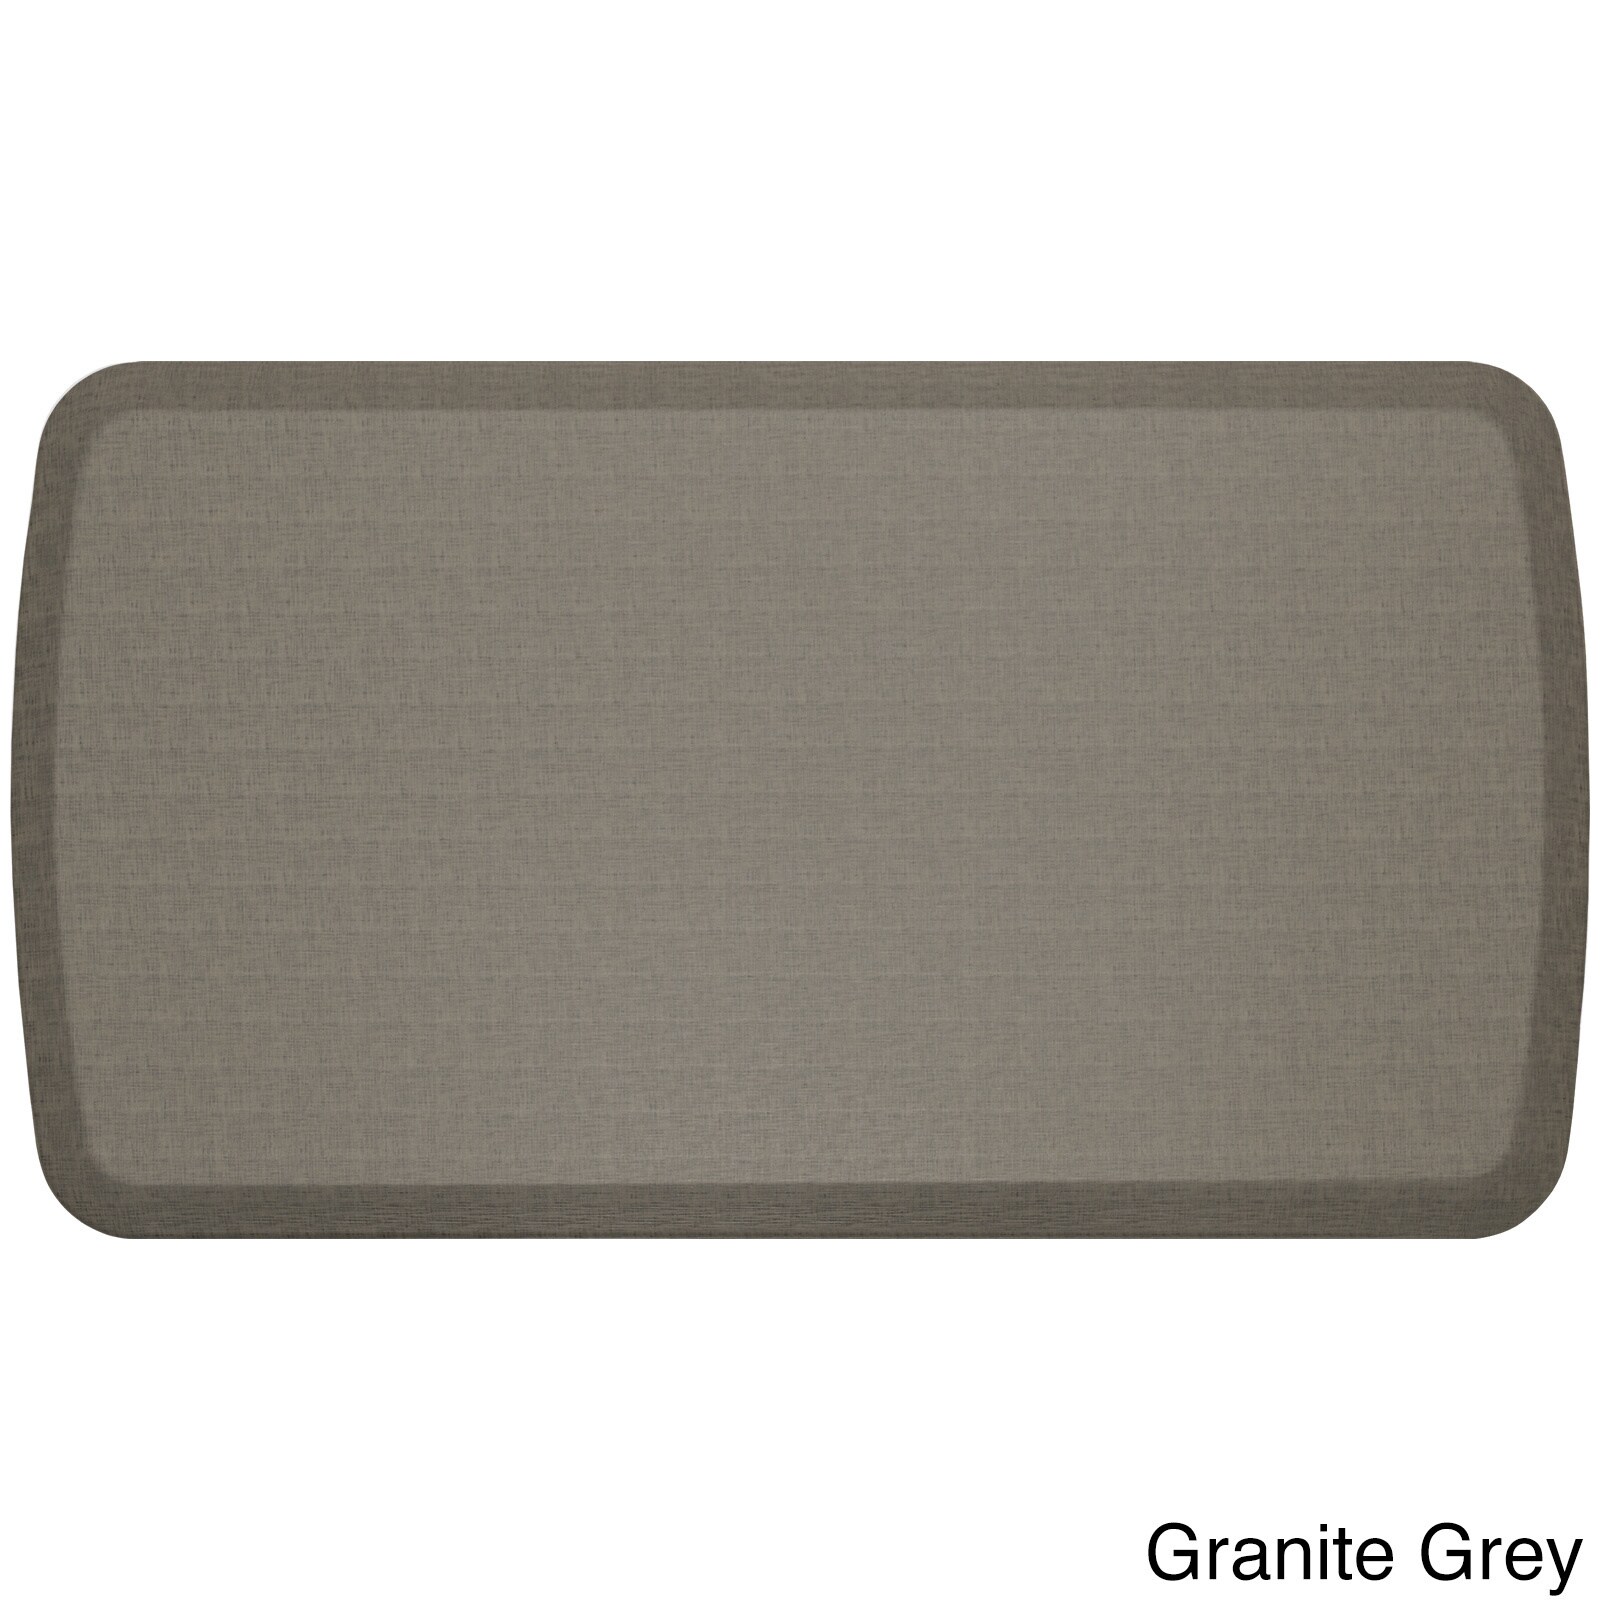 GelPro Elite Anti-Fatigue Kitchen Comfort Mat 20x72 Linen Granite